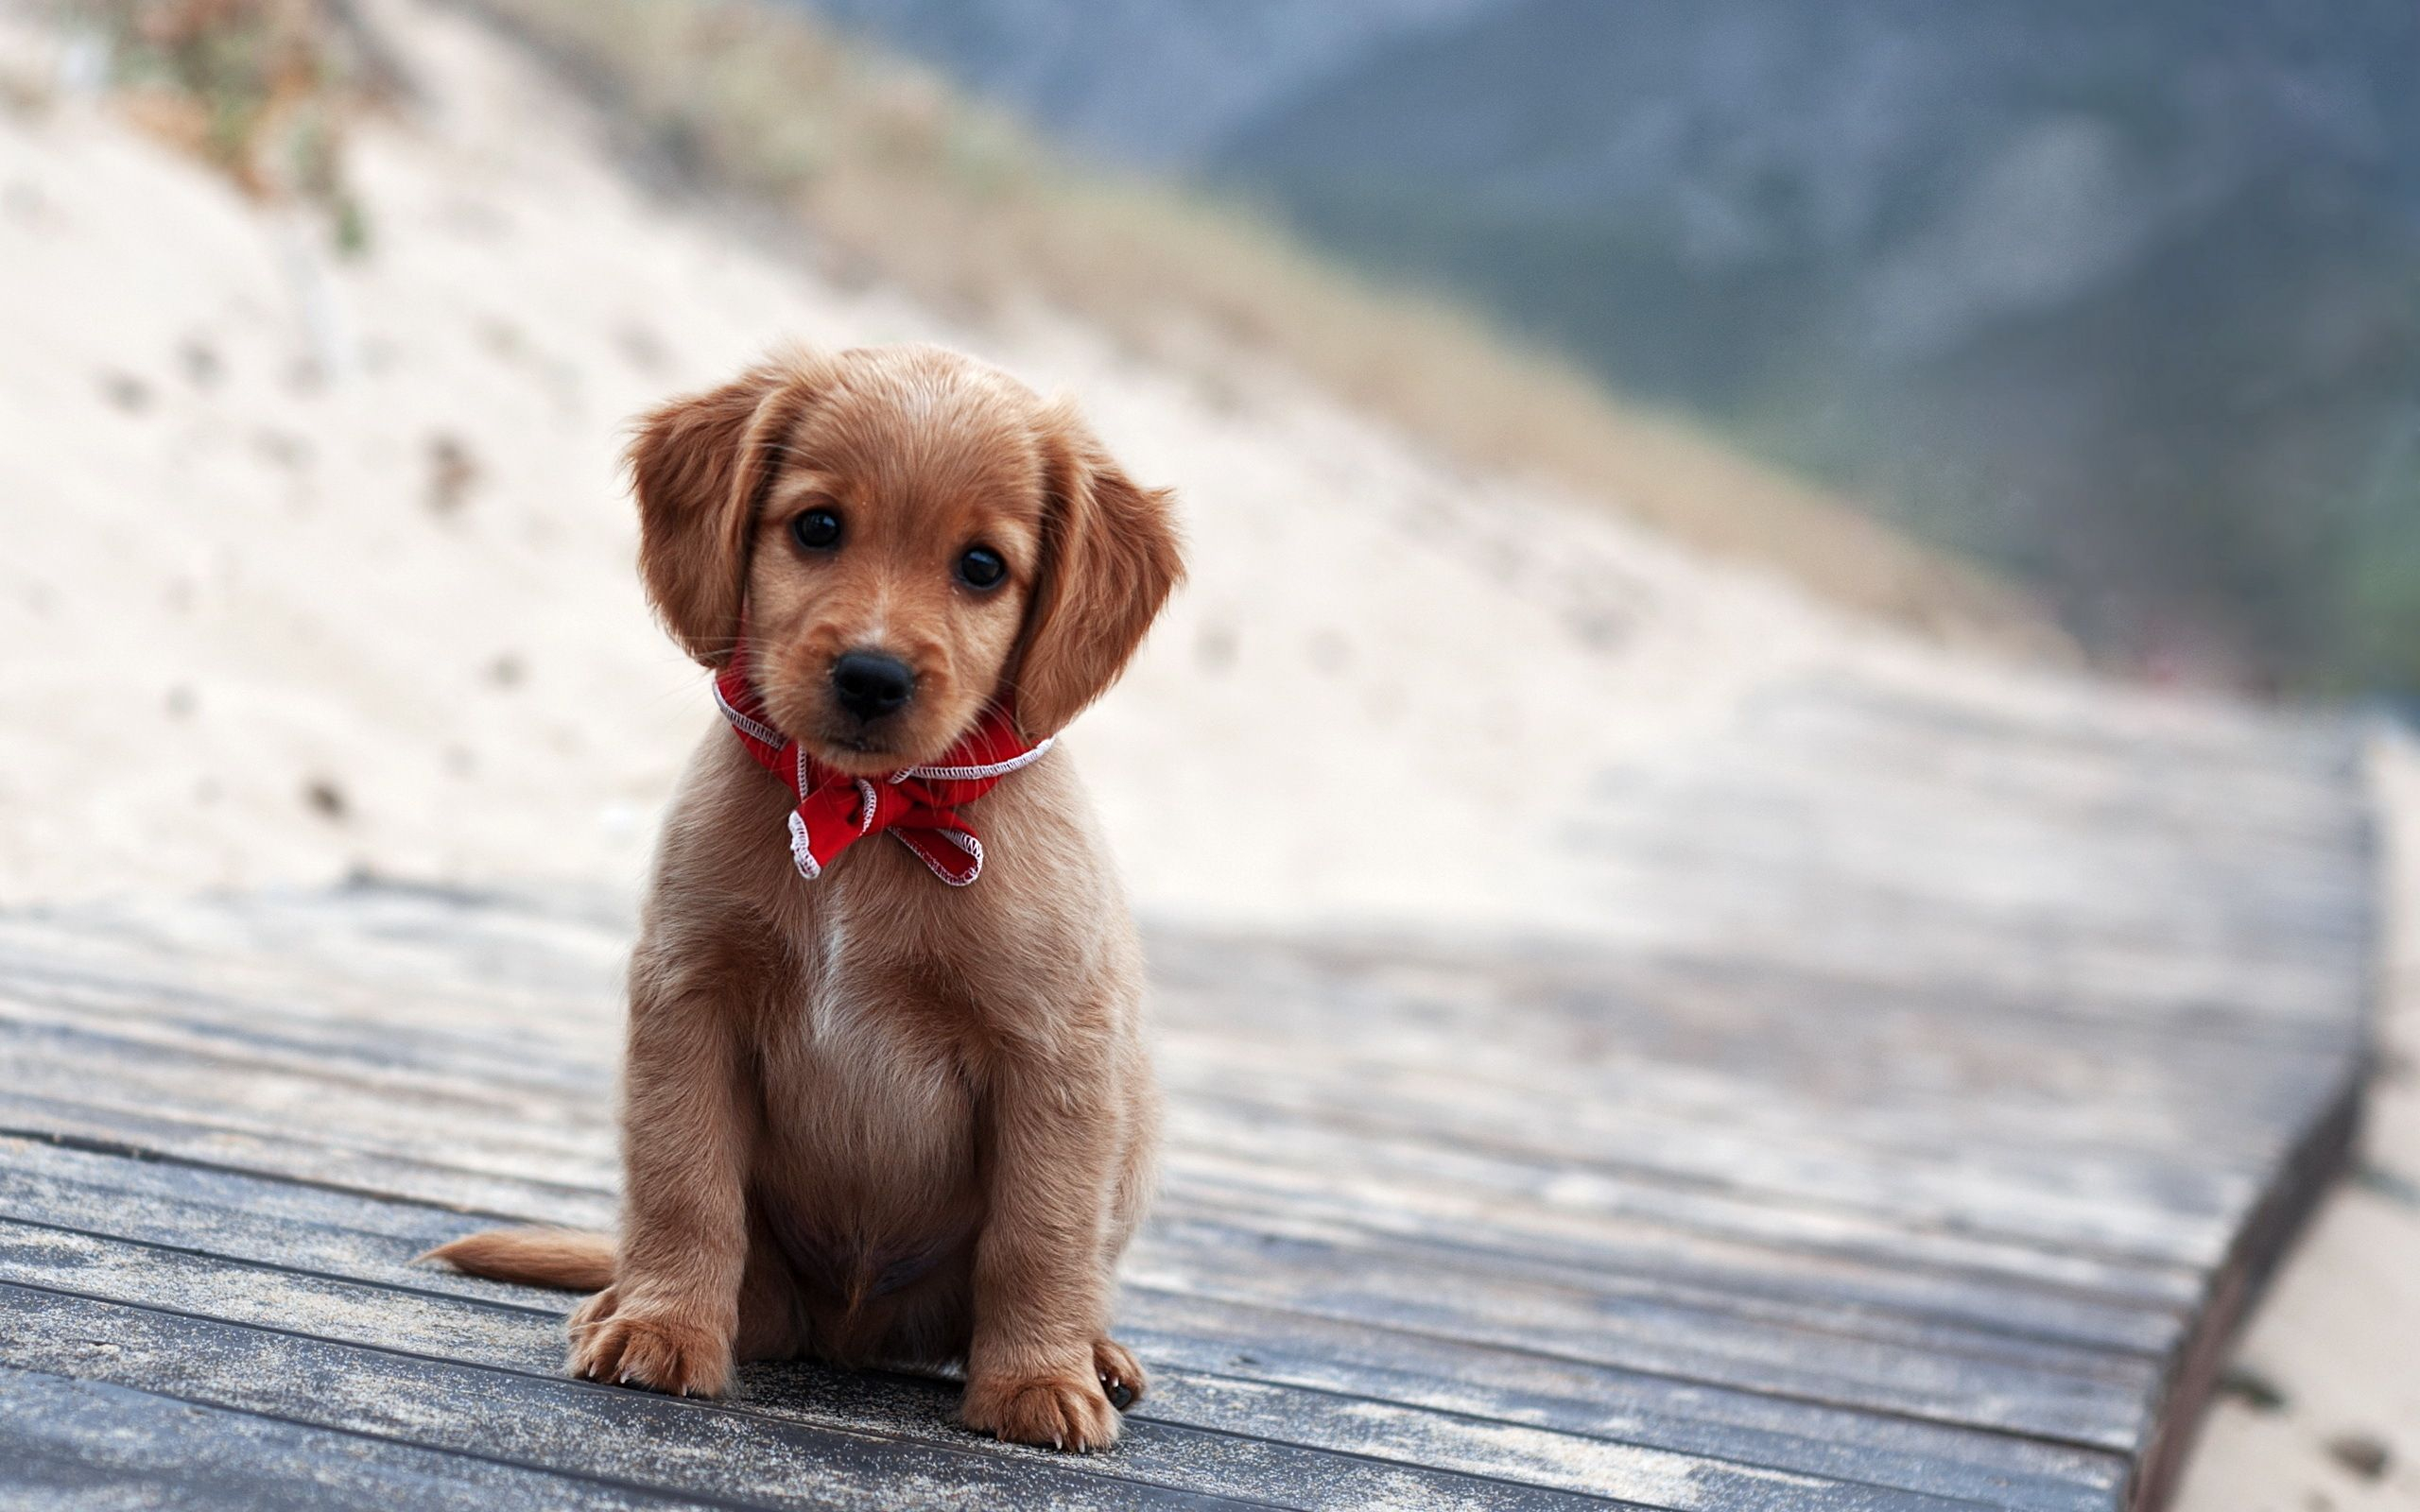 Cute lop-eared puppy in a red scarf.